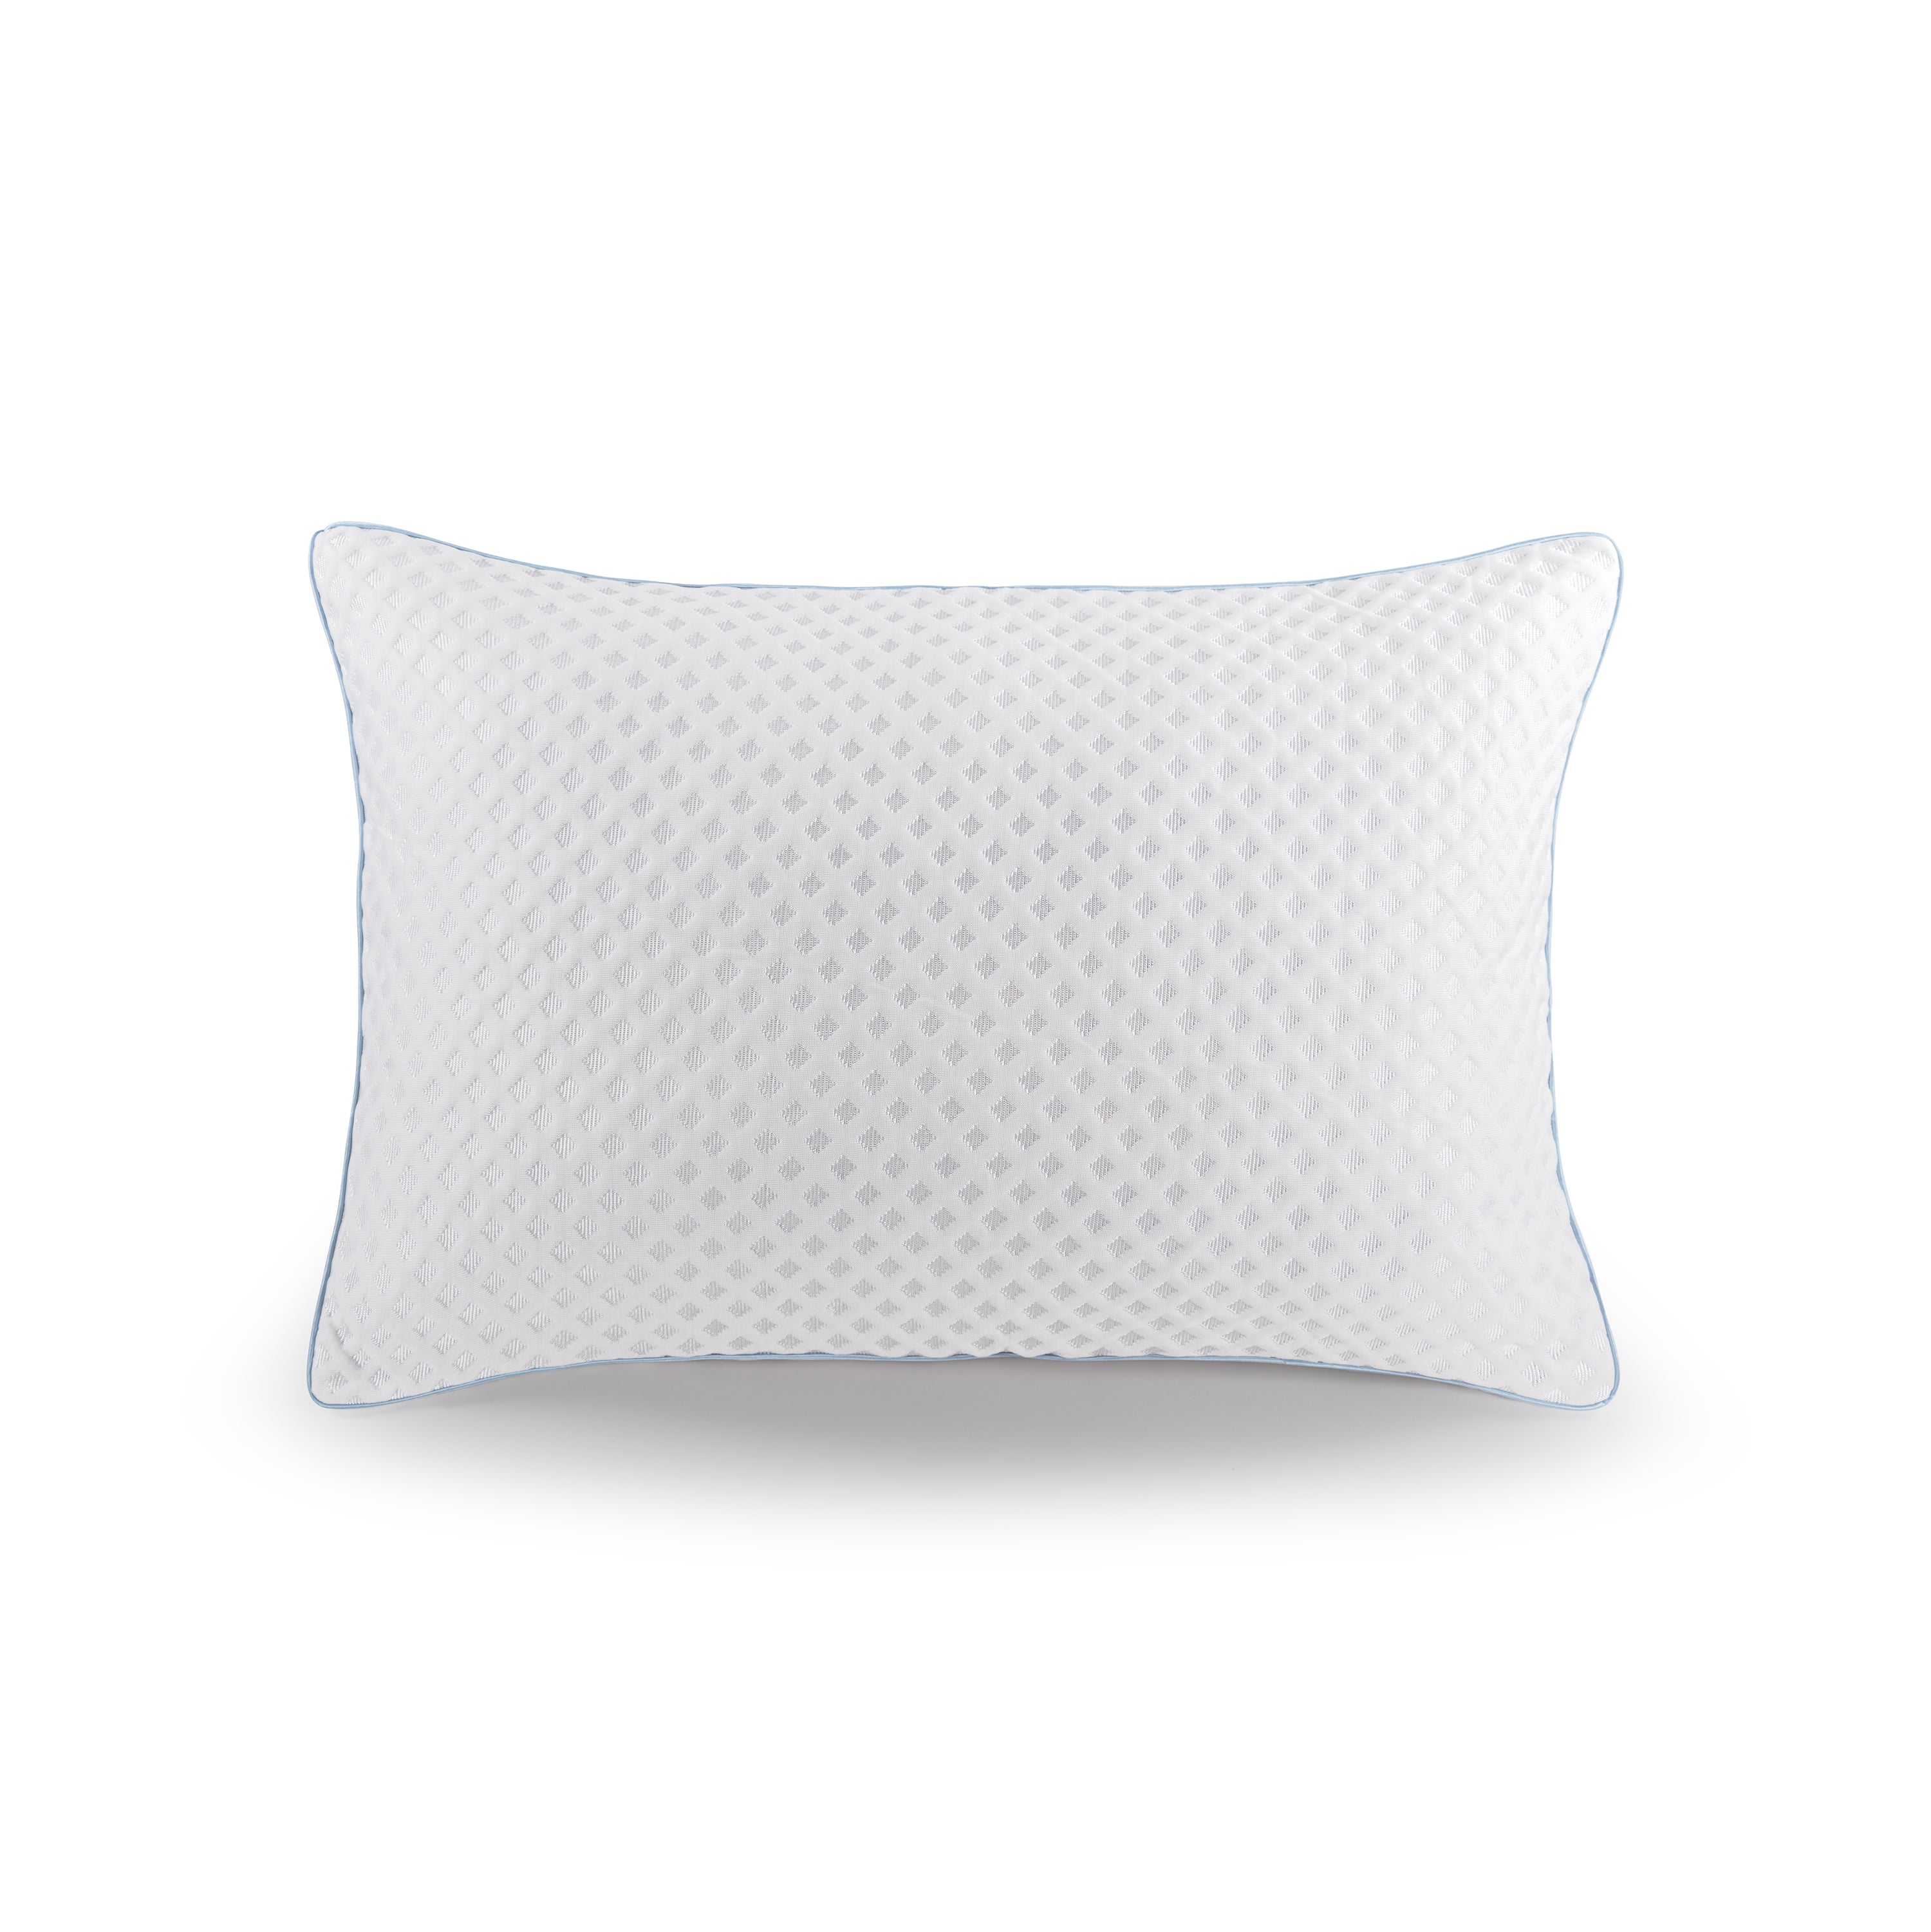 Always Cool™ Down Alternative Pillows | 2-Pack